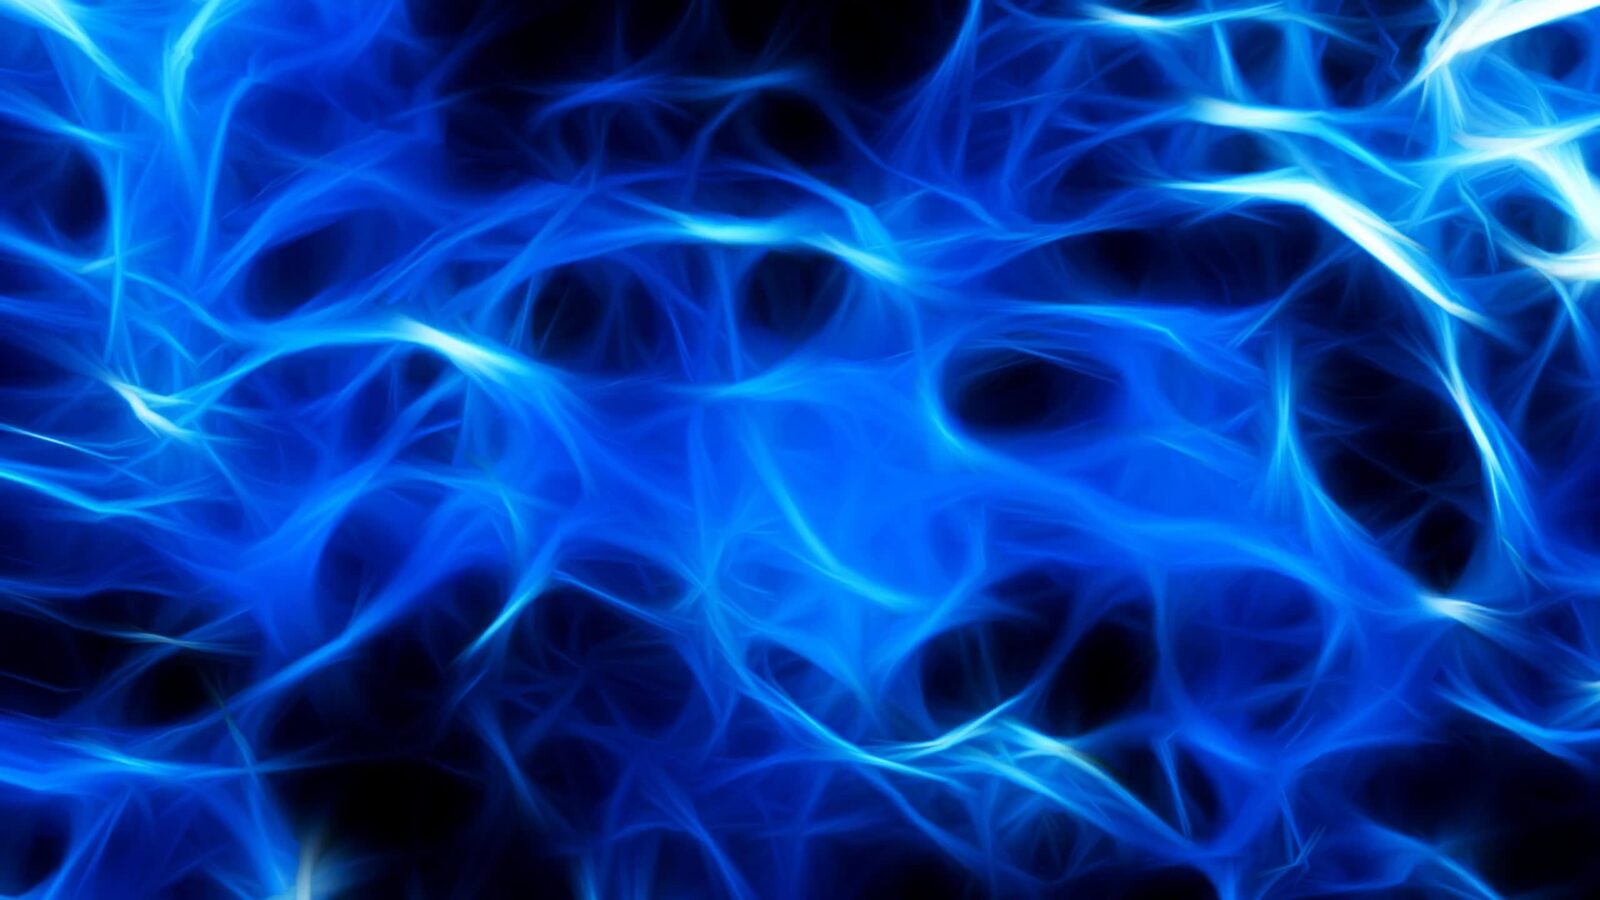 LiveWallpapers4Free.com | Blue Smoke Shapes Abstract 2K Artwork - Moving Desktop Wallpaper